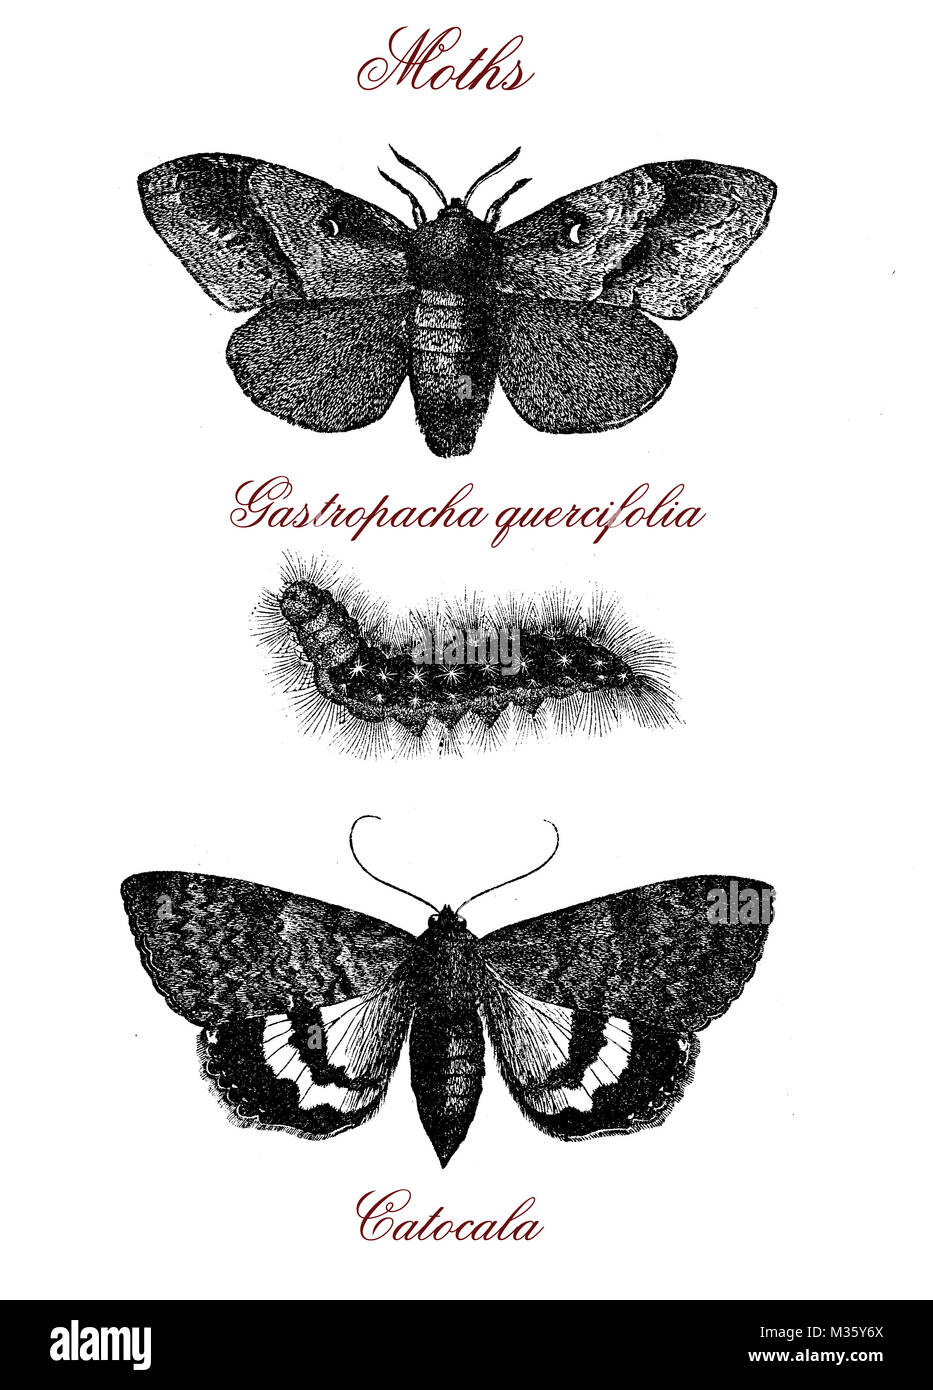 Moths: gastropacha quercifolia and catocala, vintage engraving Stock Photo